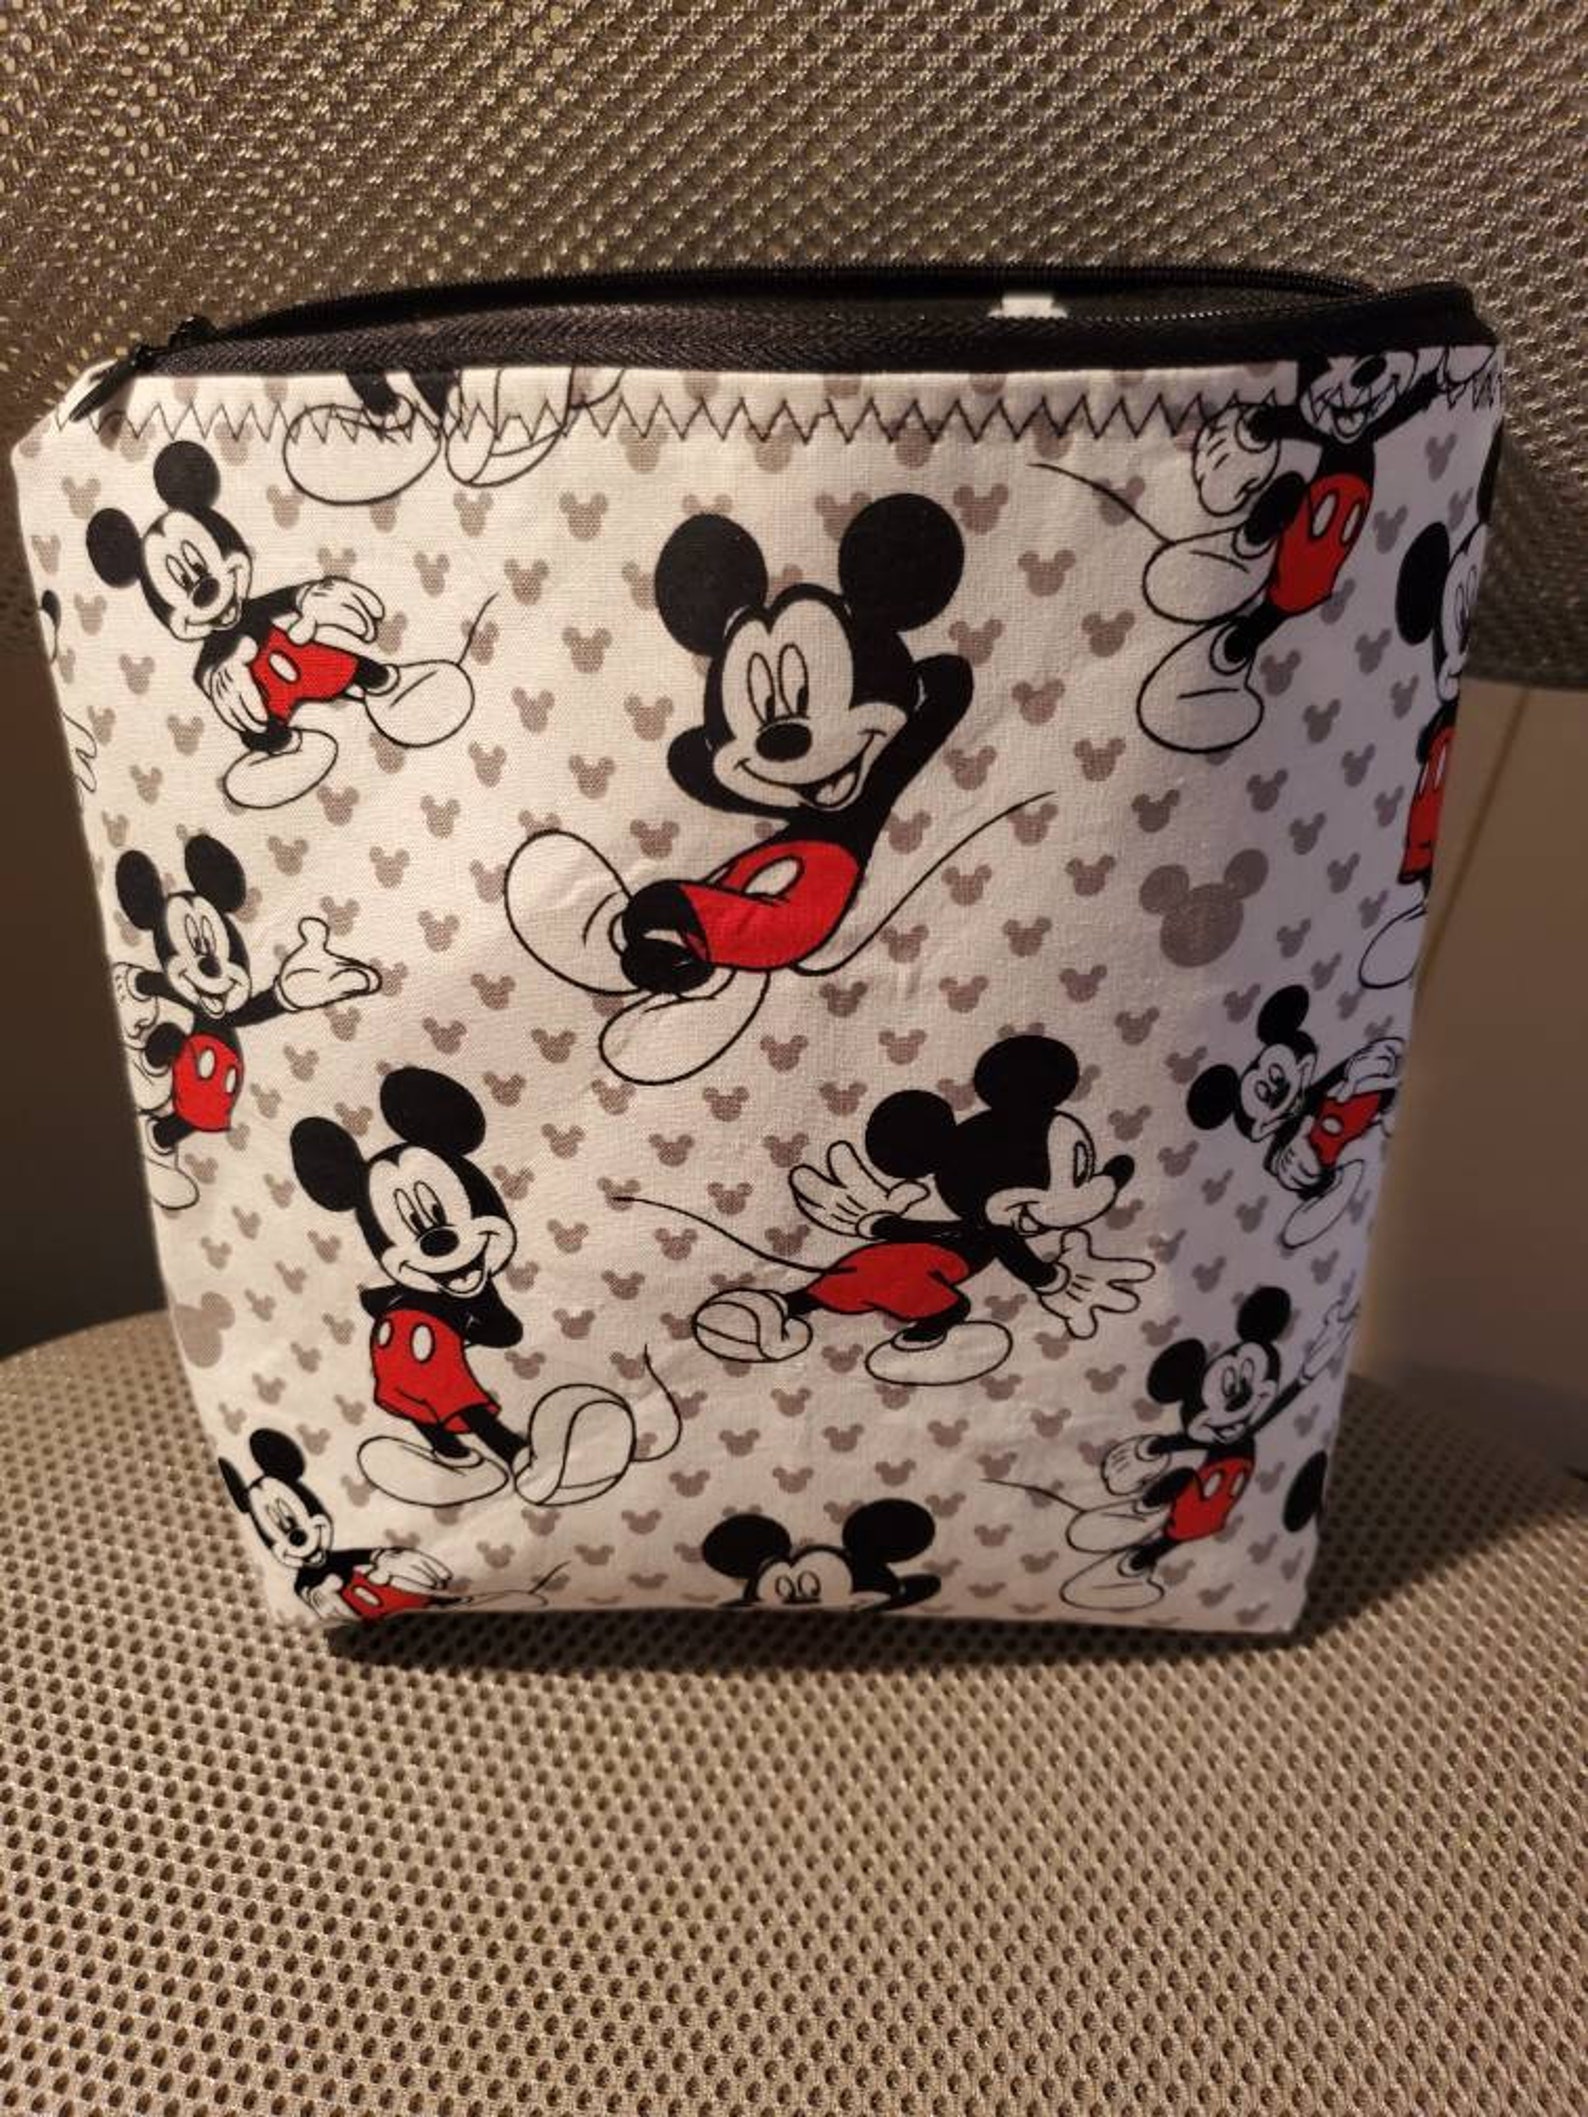 Mickey mouse makeup travel bag HANDMADE | Etsy